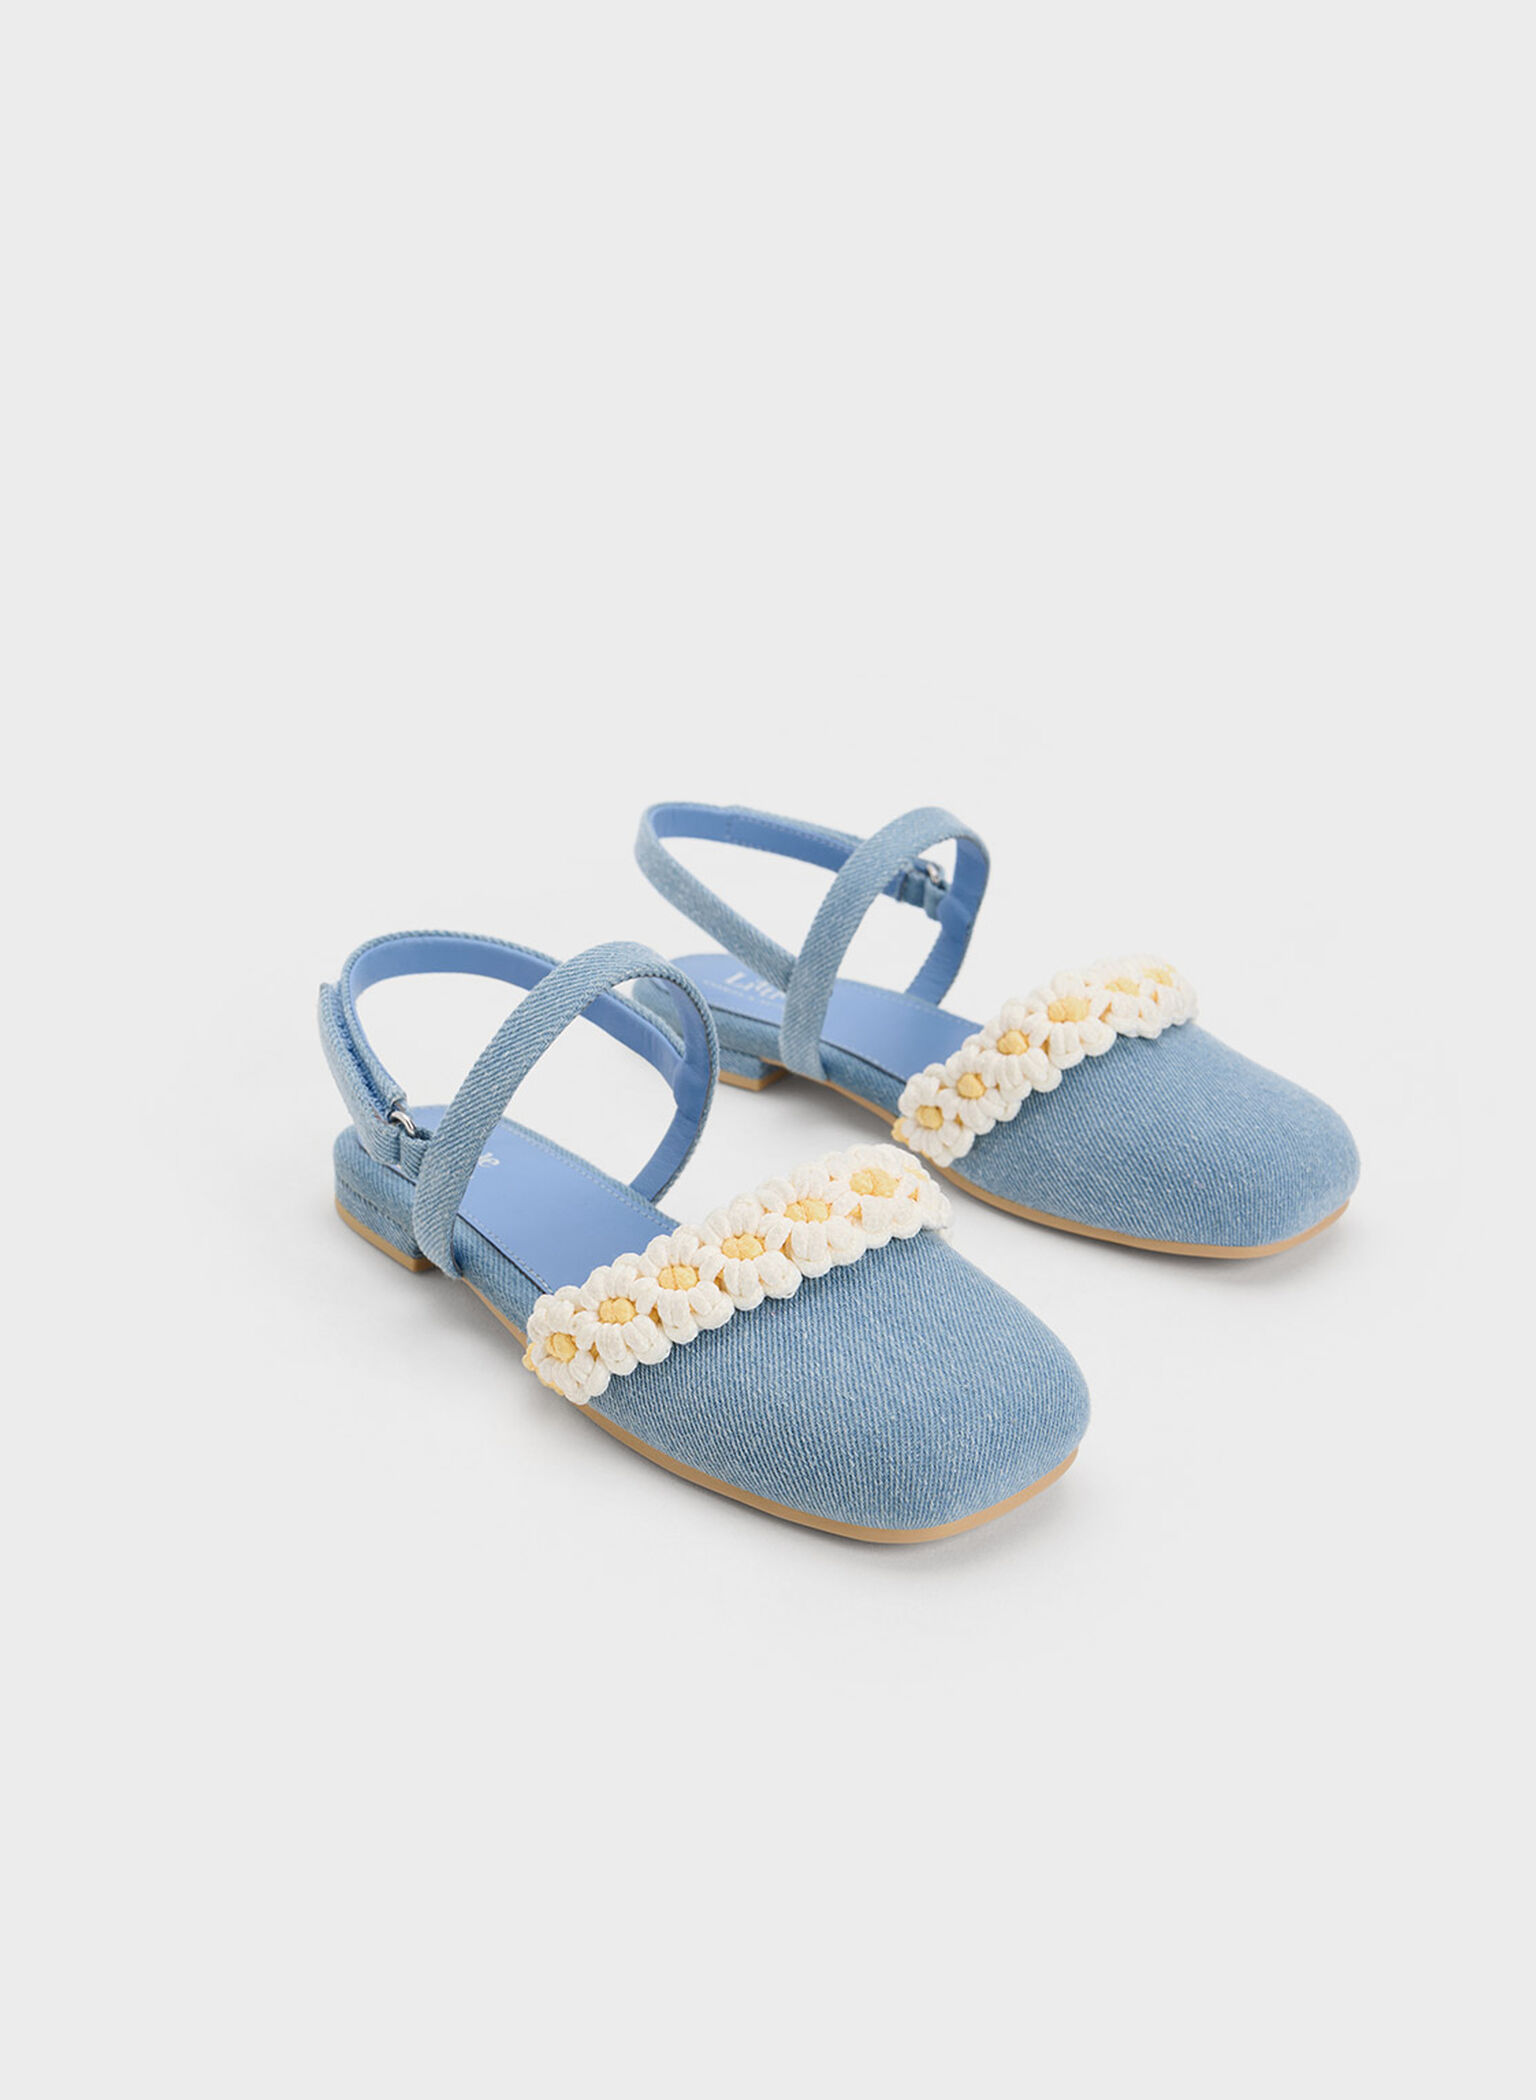 Girls' Floral Crochet Denim Slingback Flats, Light Blue, hi-res